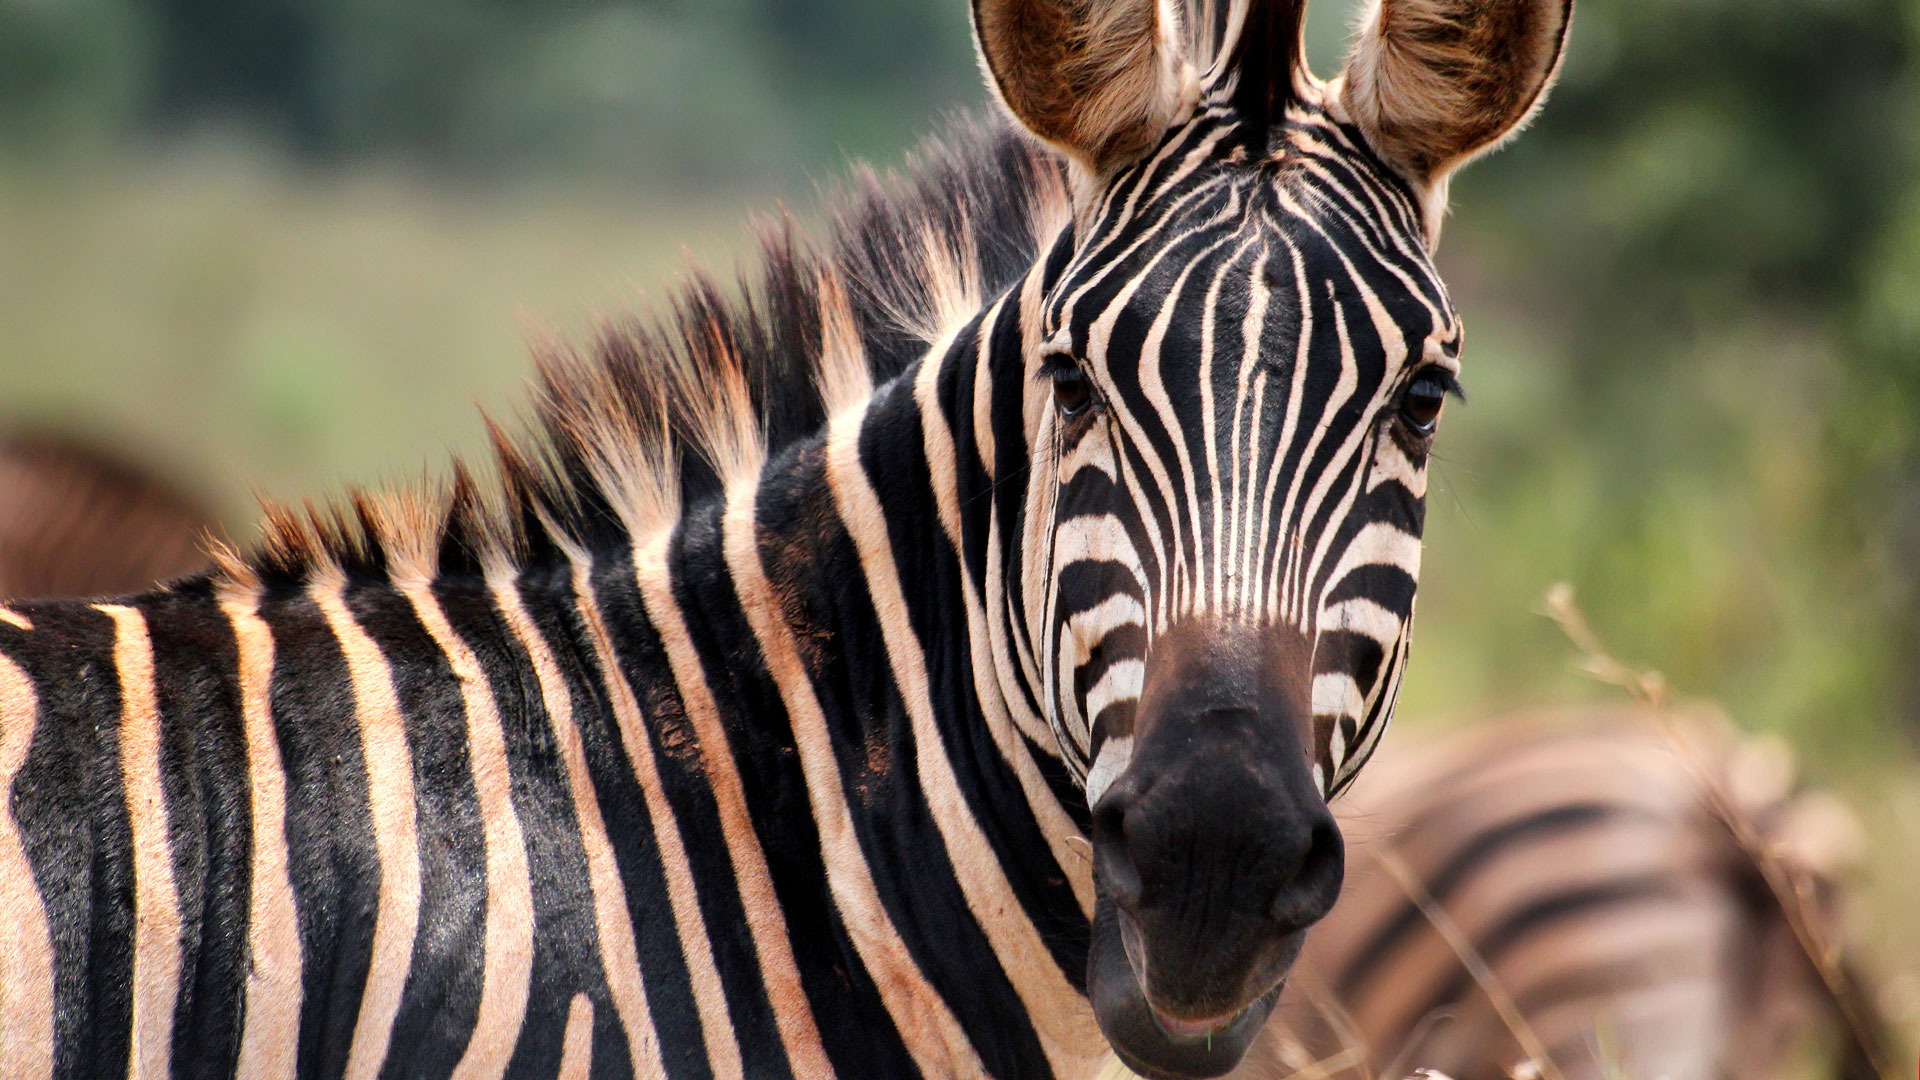 nws-st-rwanda-zebra-close-up